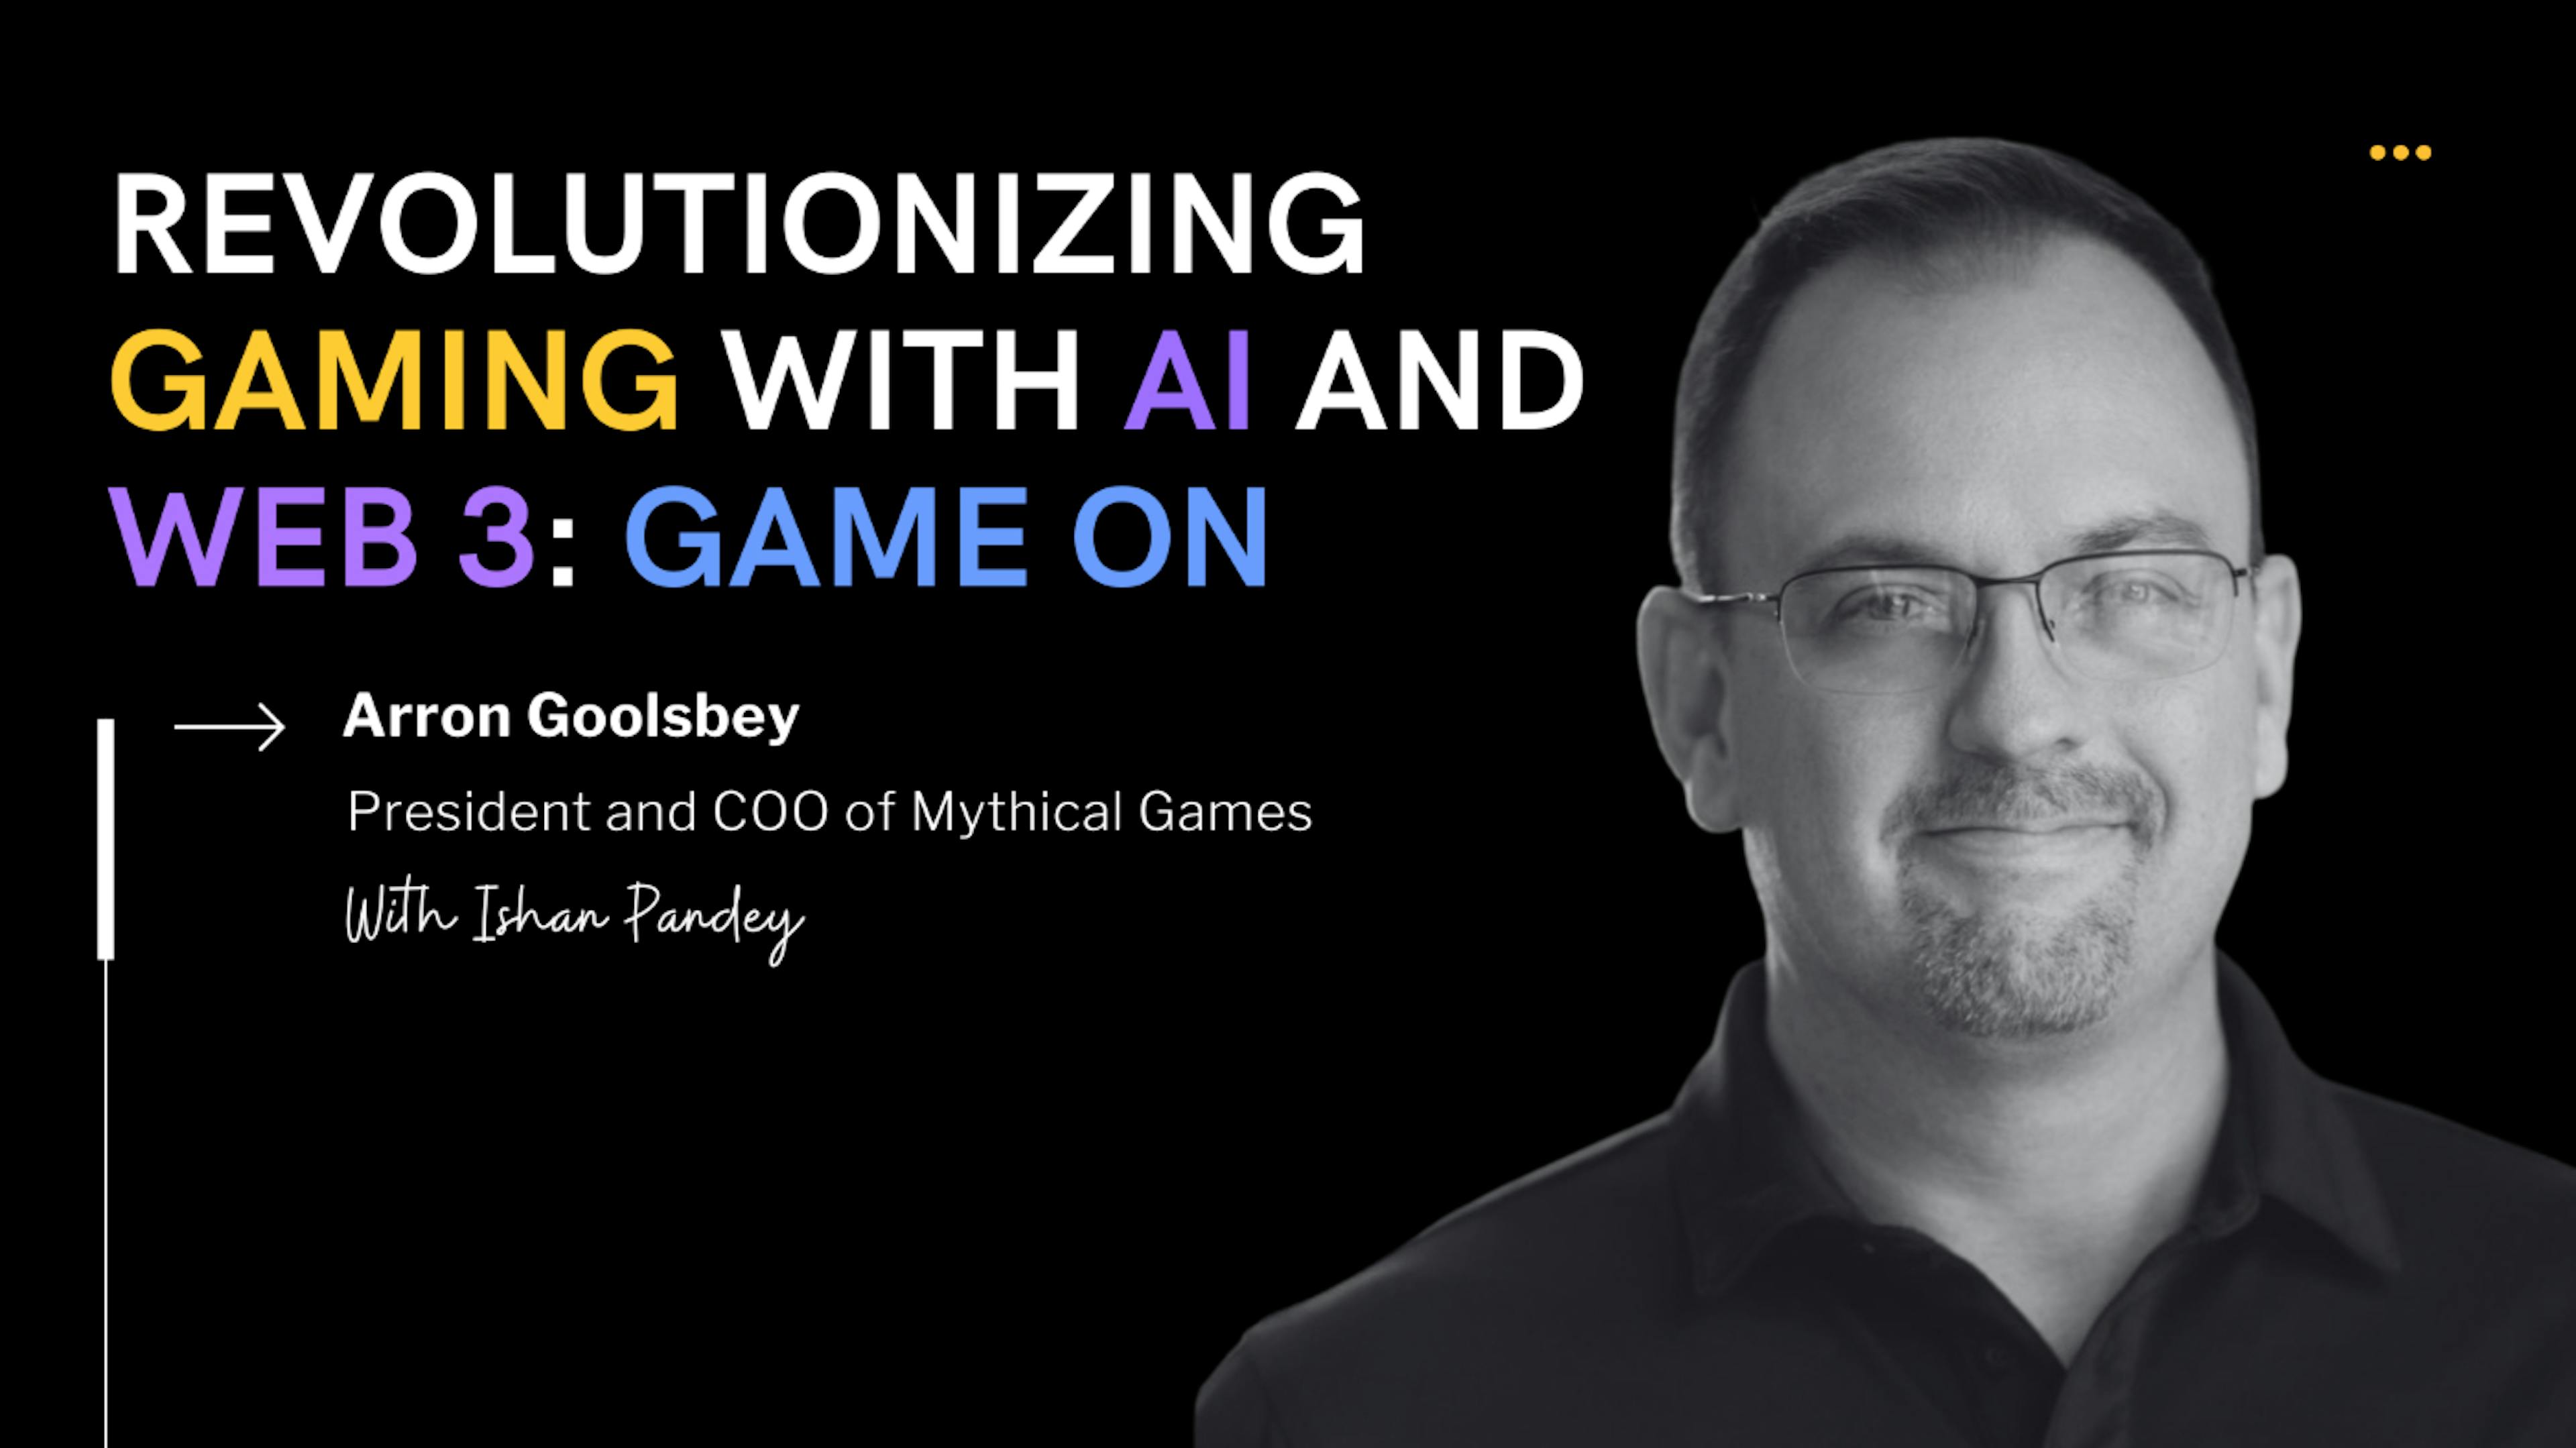 featured image - Arron Goolsbey fala sobre o futuro dos jogos com IA e Blockchain na Mythical Games